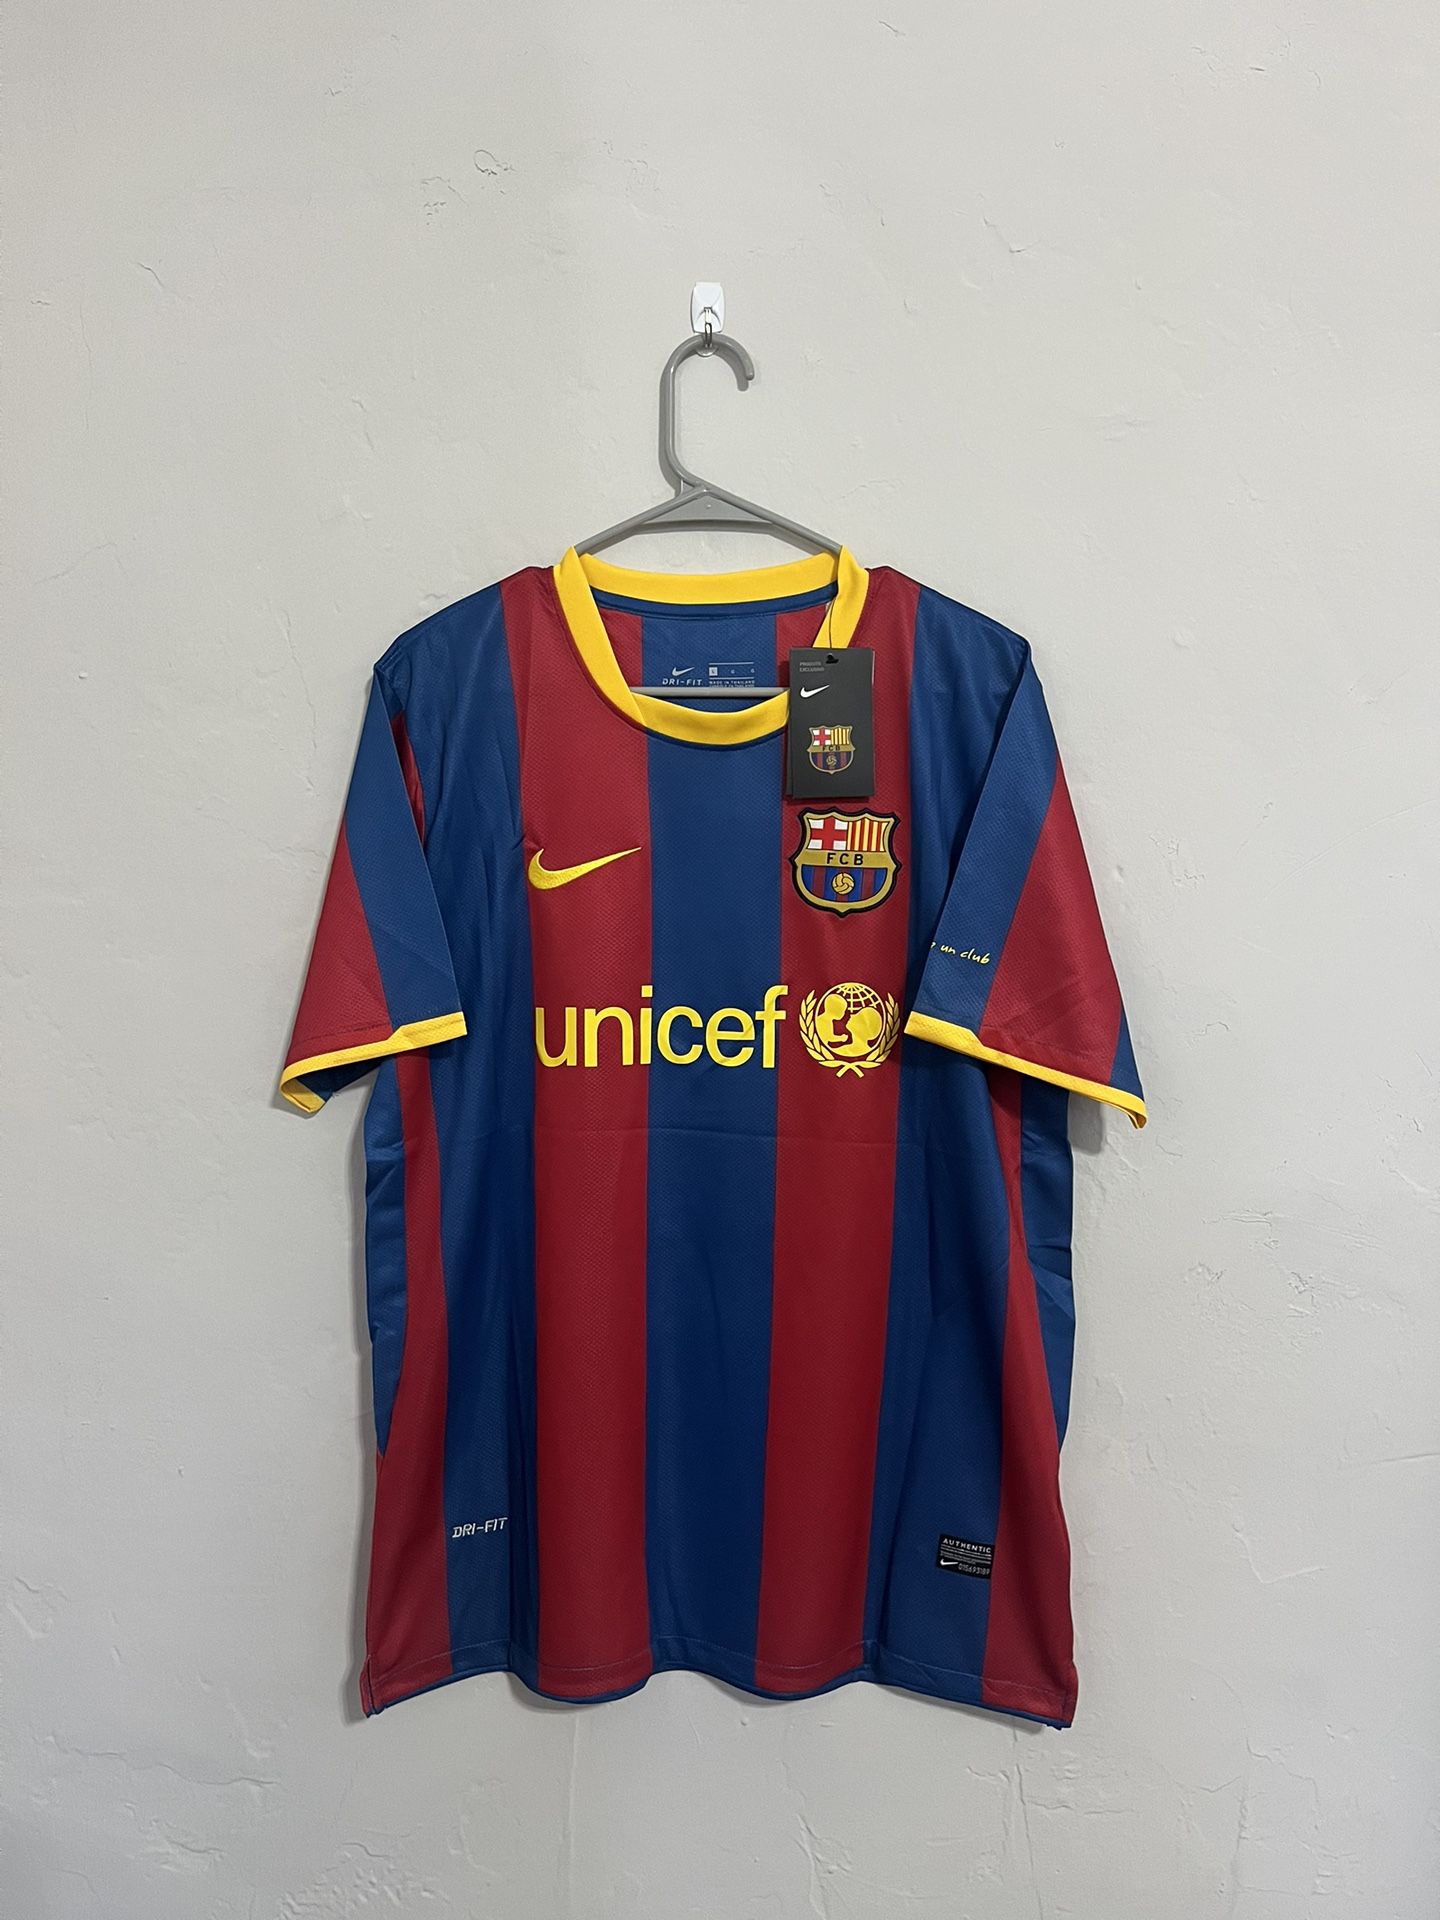 FC Barcelona 2010-11 Home Messi Jersey Medium (slim Fit)